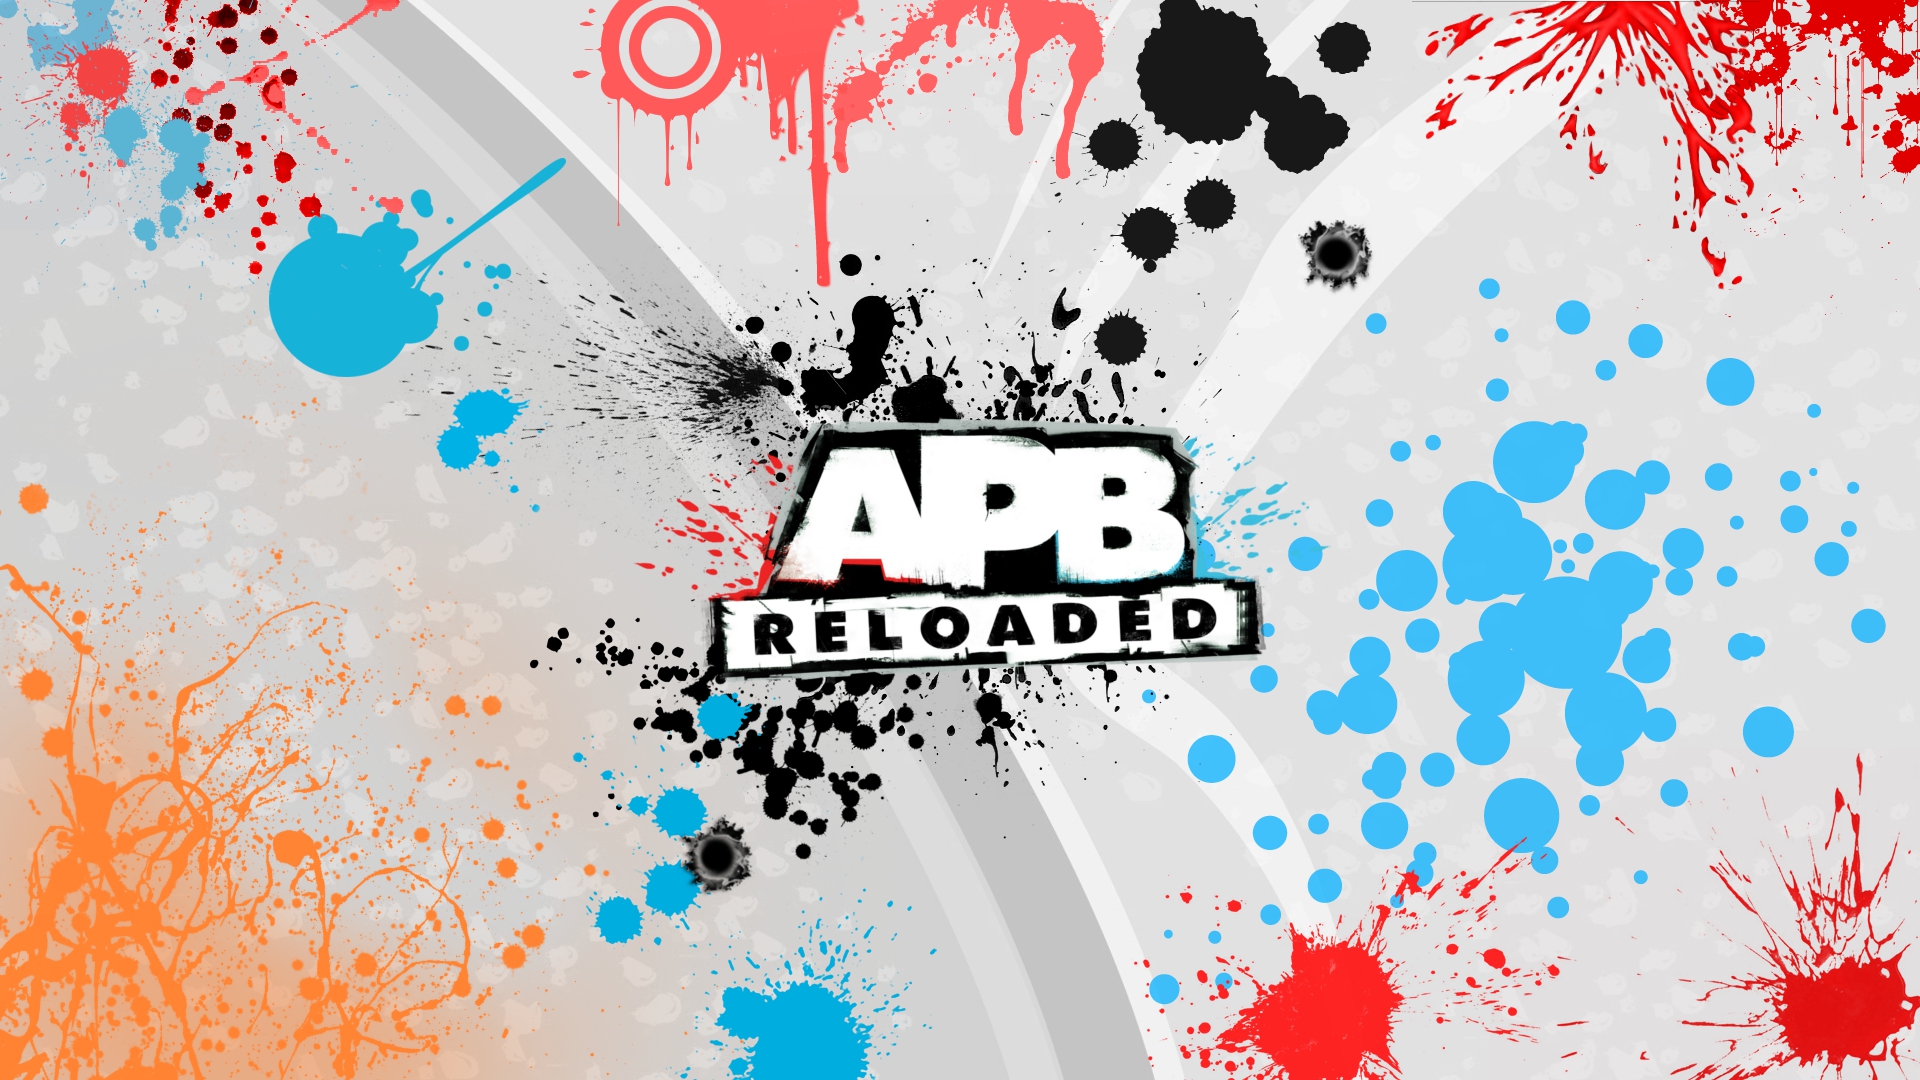 Apb Reloaded Wallpaper By Binary Map